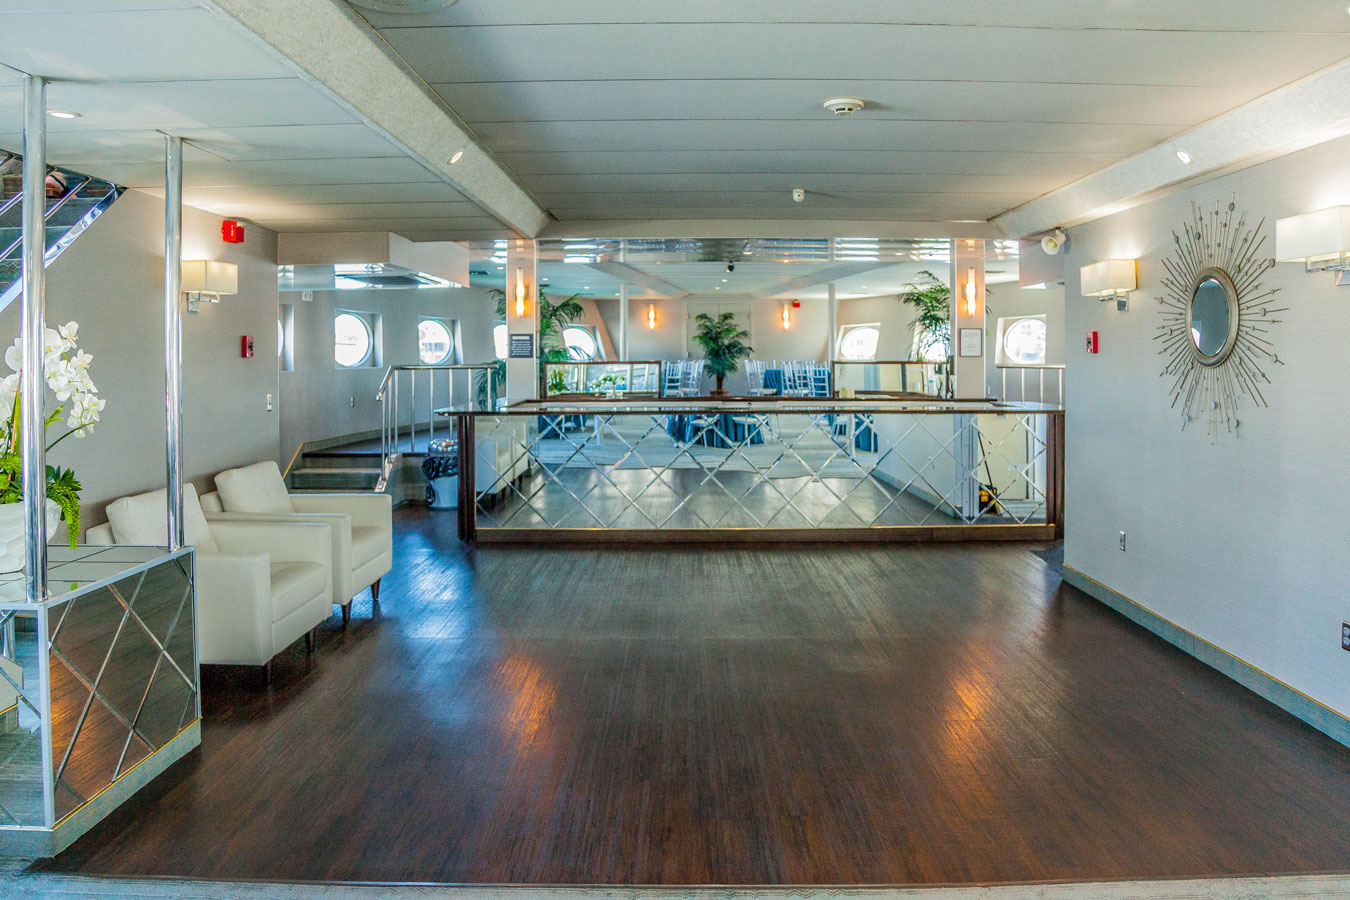 latin boat party yacht cruise